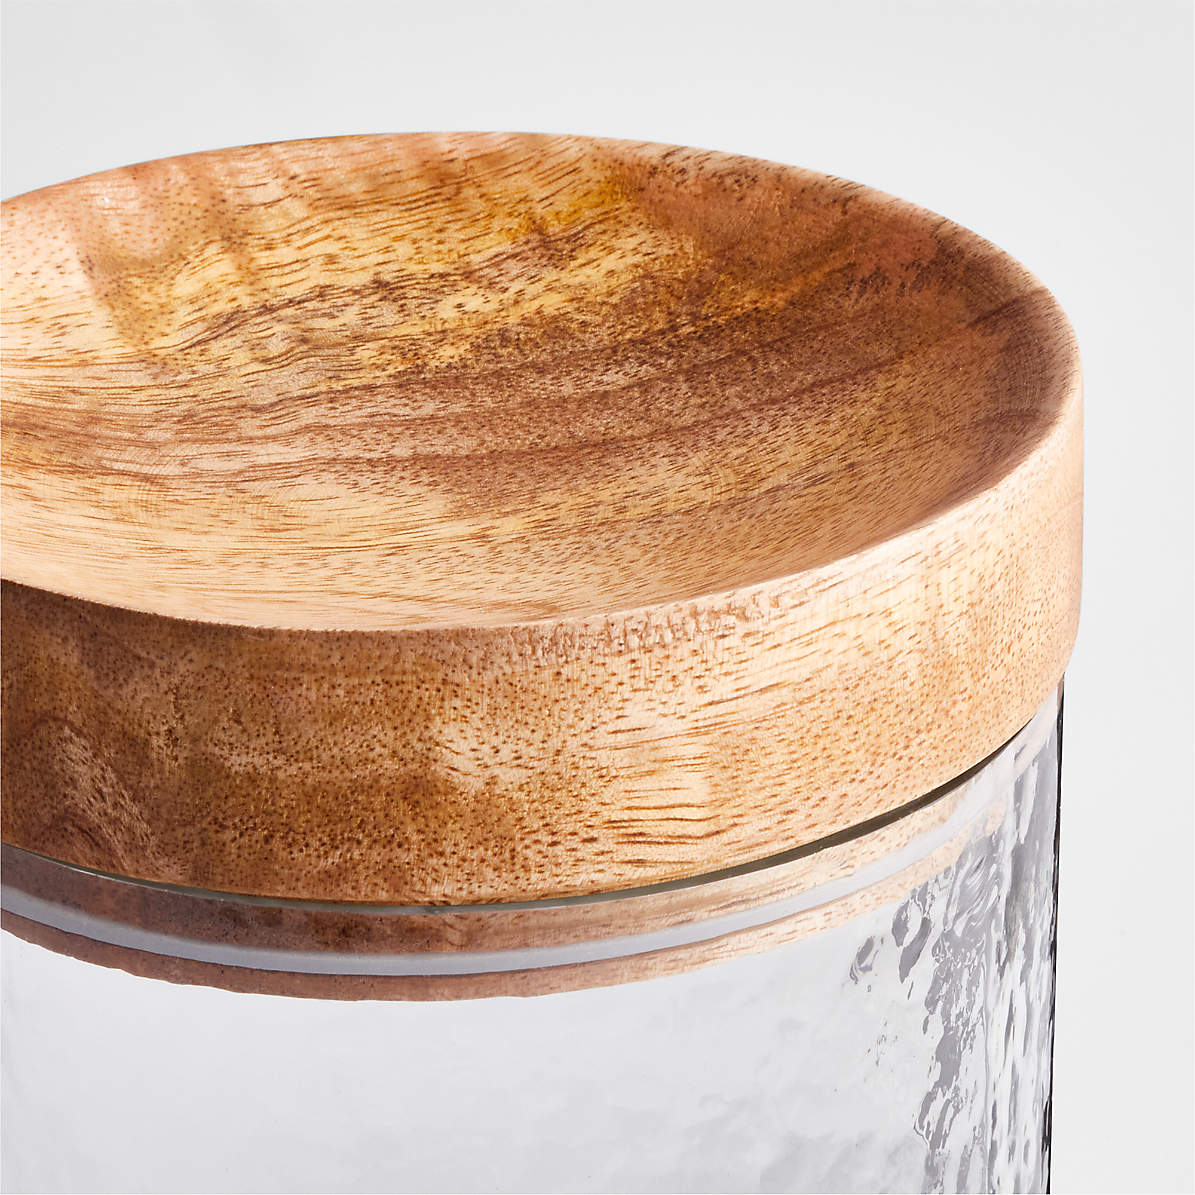 Winston Porter Crackle Glass Canister with Wooden Lid Storage Jar